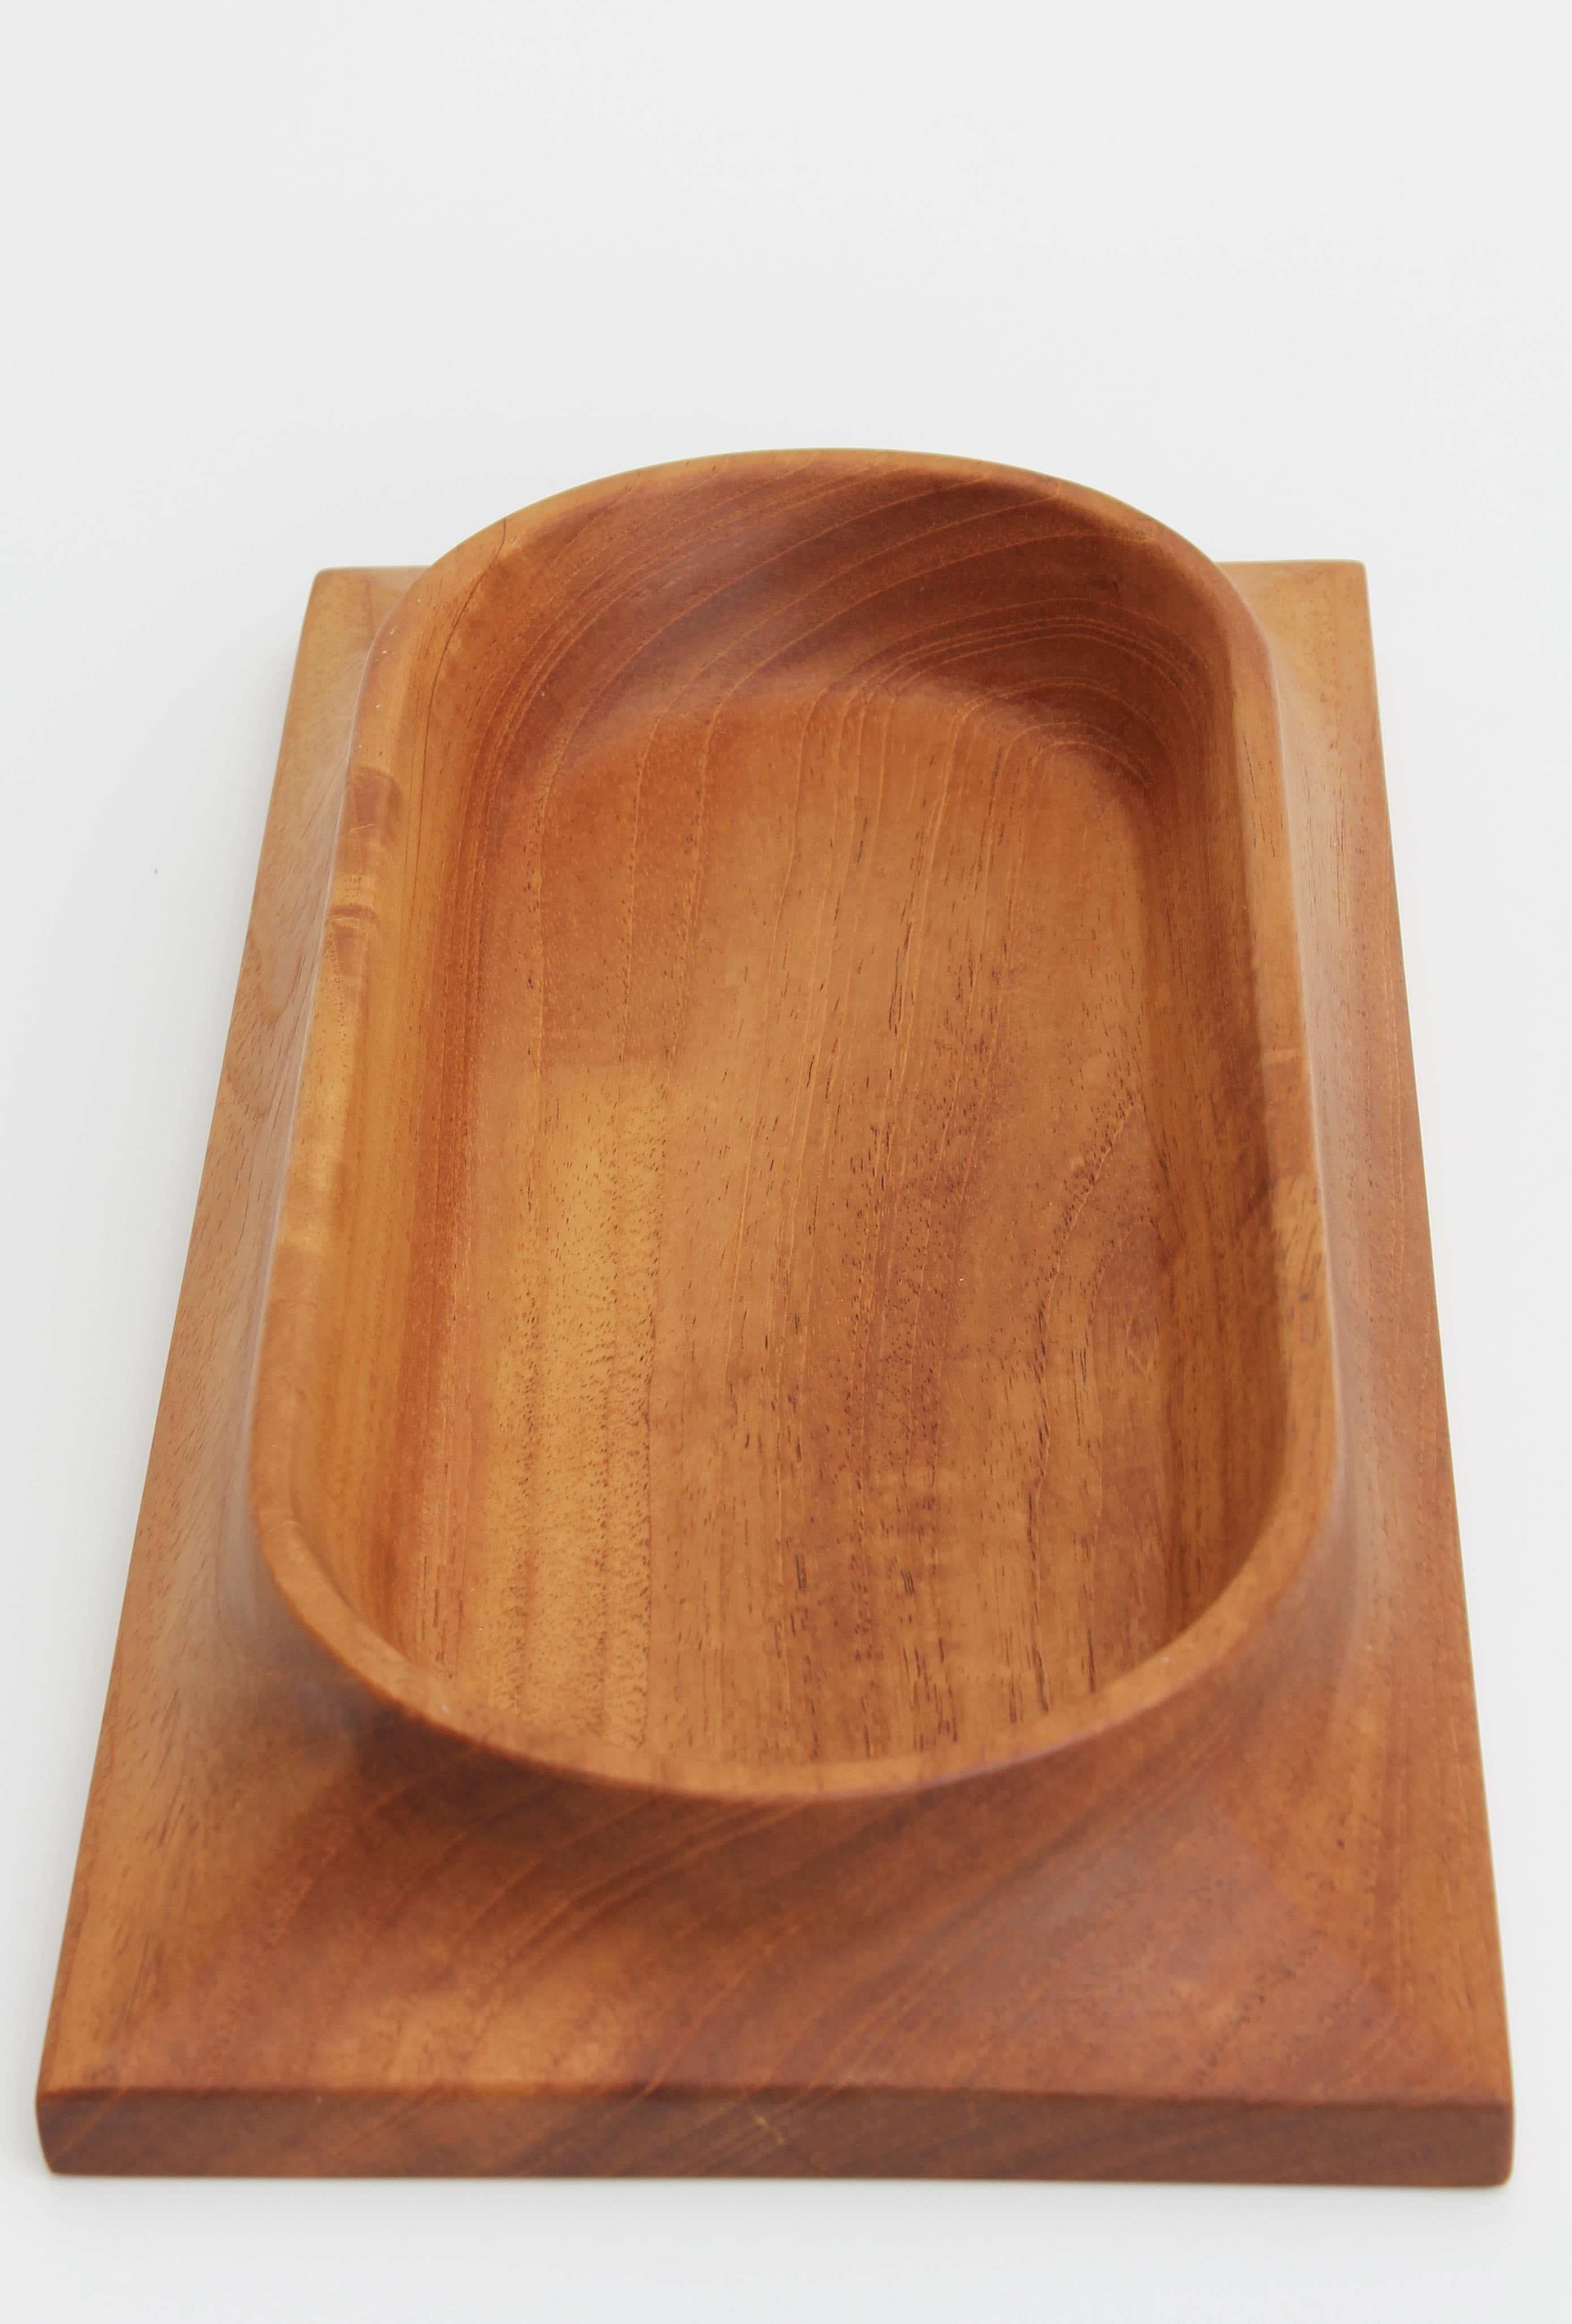 Woodwork Dórico wood centerpiece - medium size (pink cedar wood) For Sale